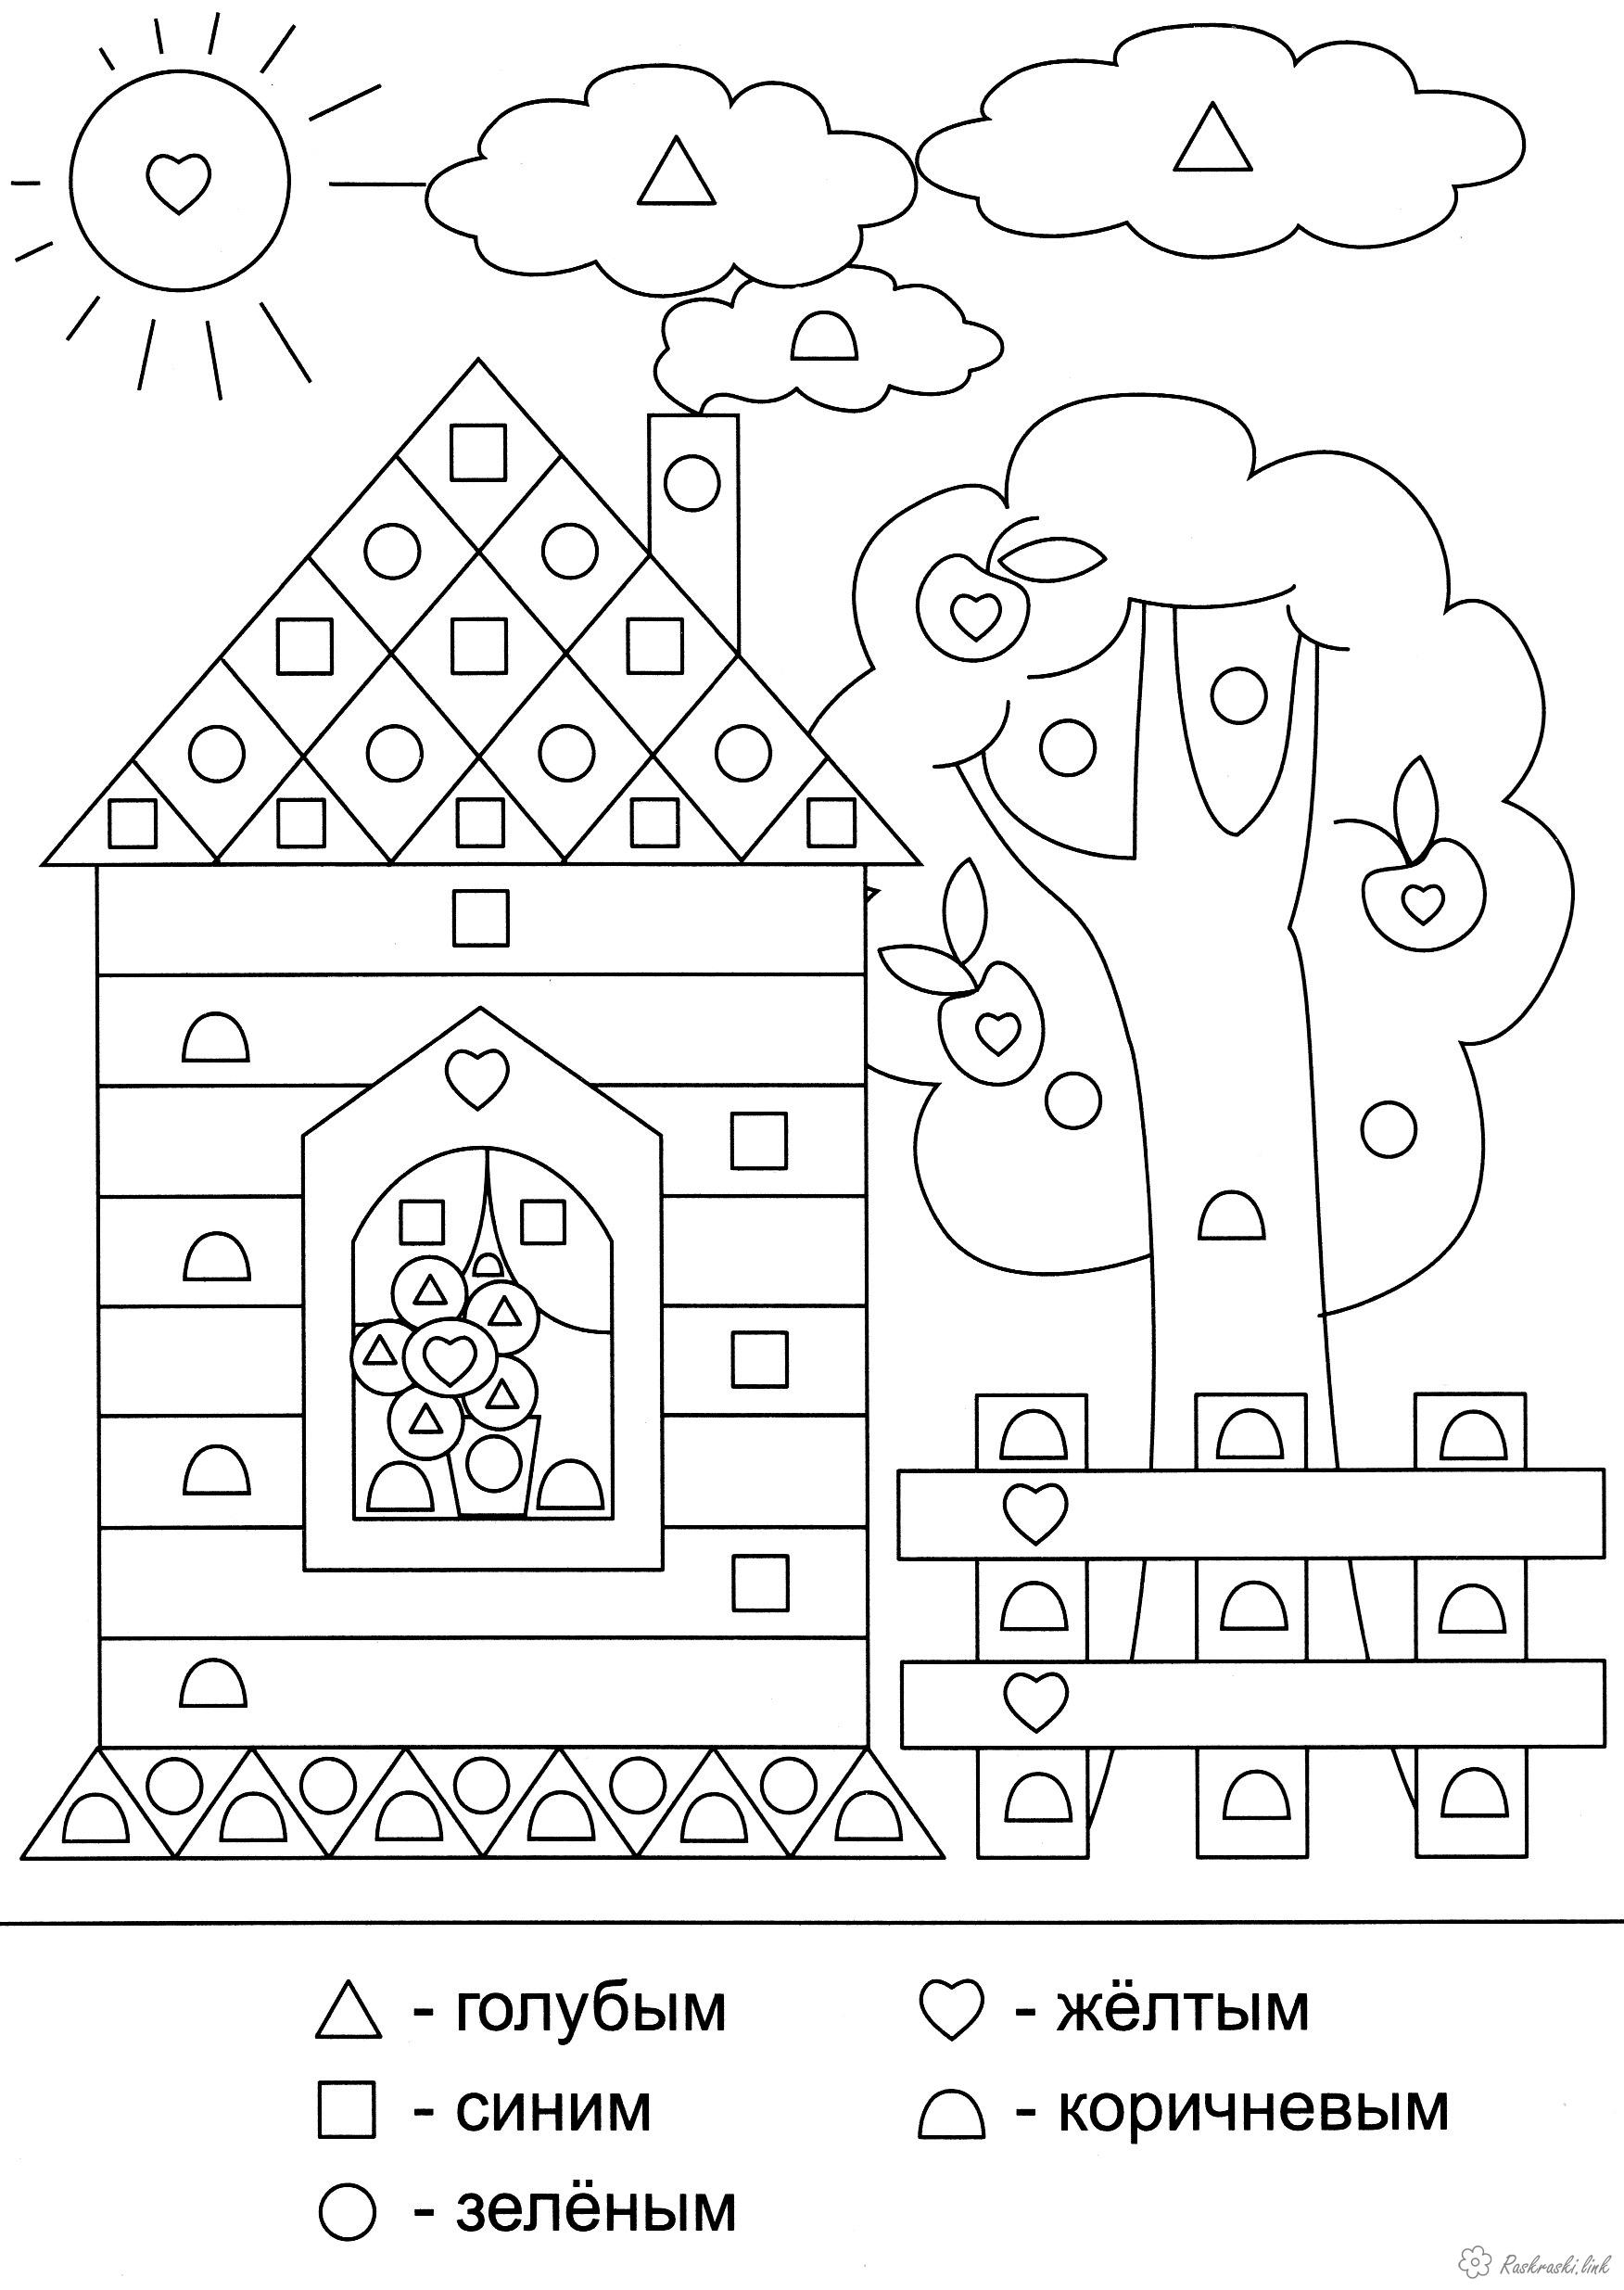 Розмальовки розмальовка сонце будинок паркан дерево облок трикутник квадрат коло